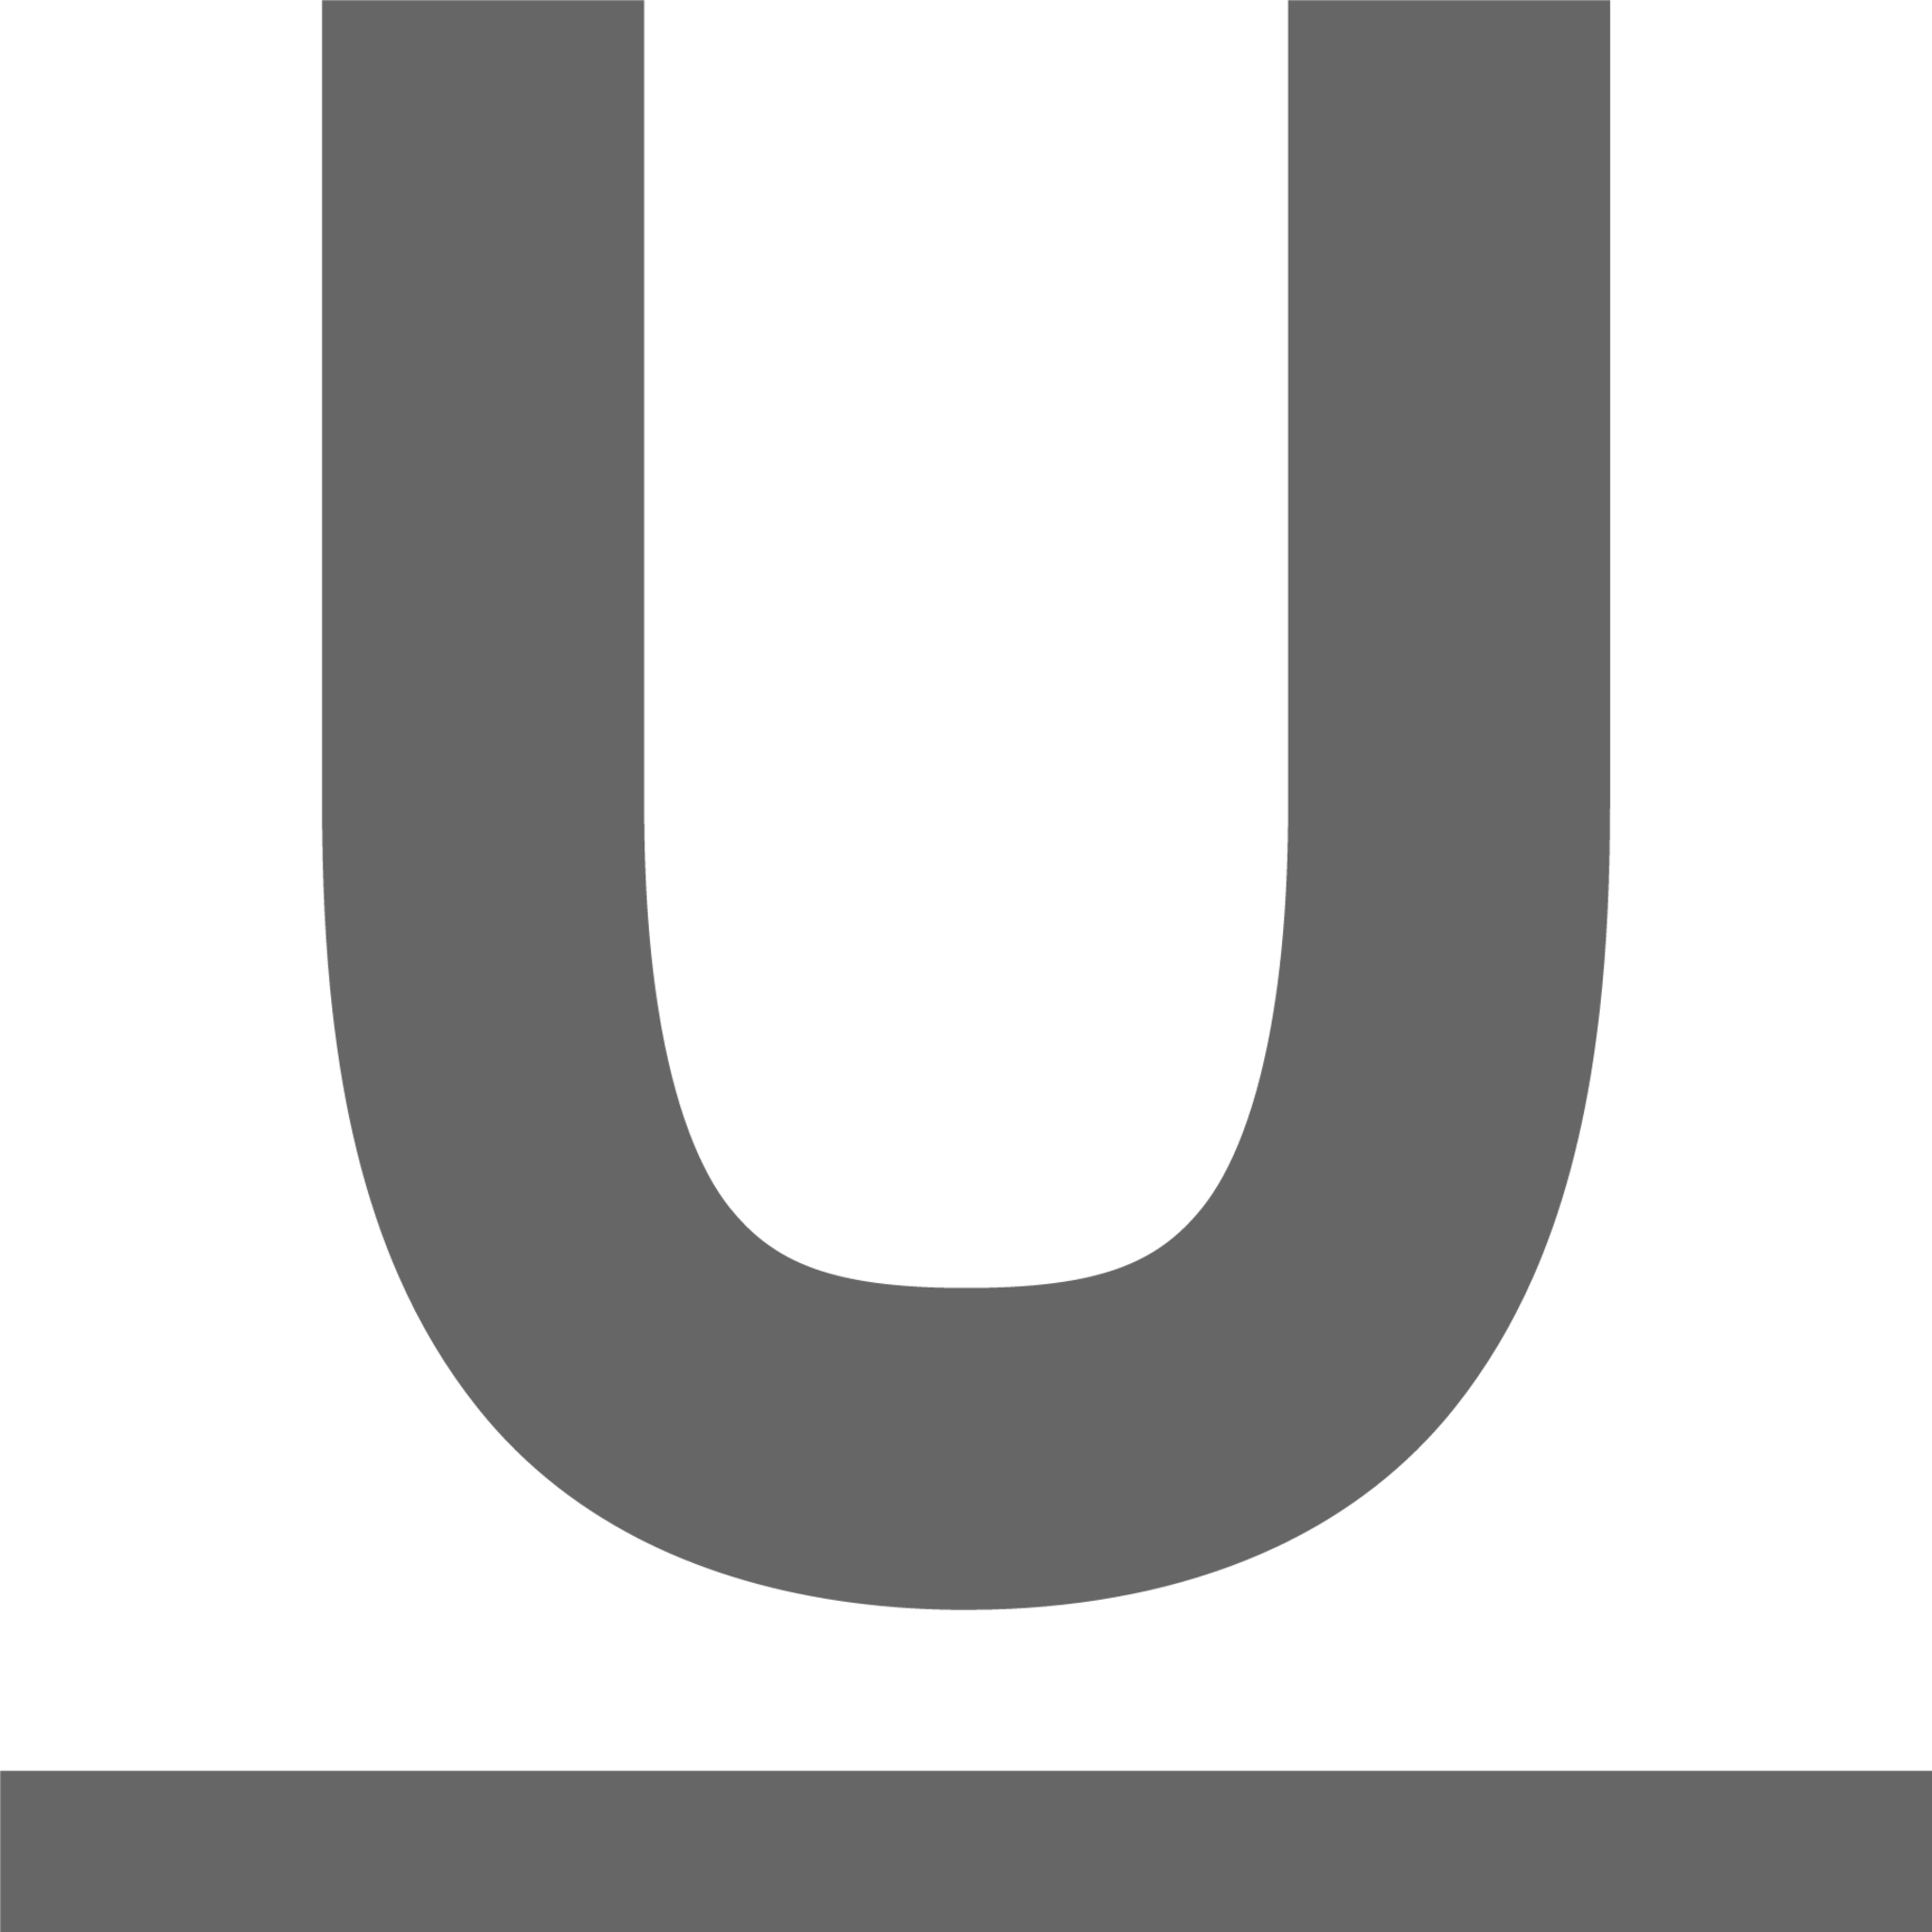 format text underline symbolic icon